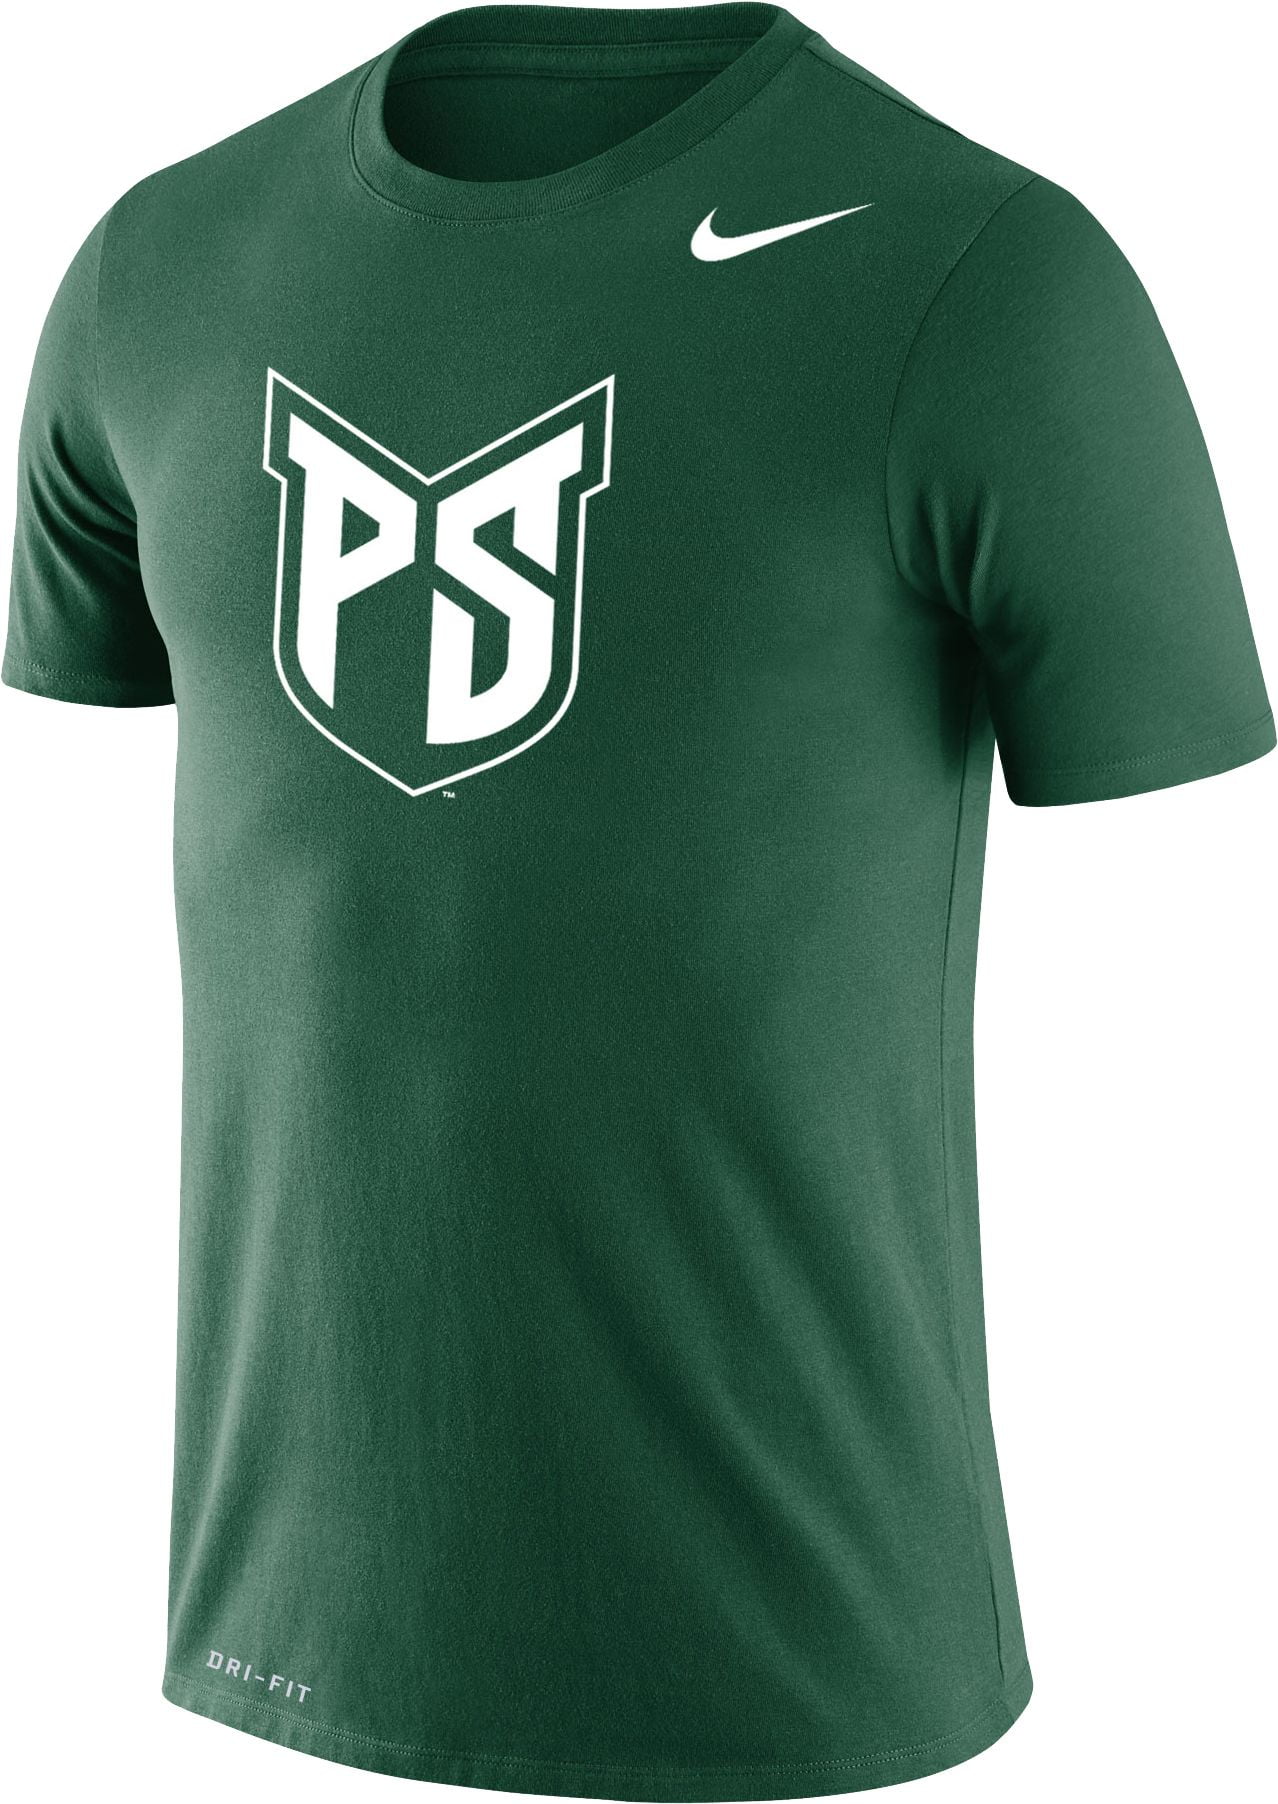 Nike - Nike Men's Portland State Vikings Green Logo Dry Legend T-Shirt ...